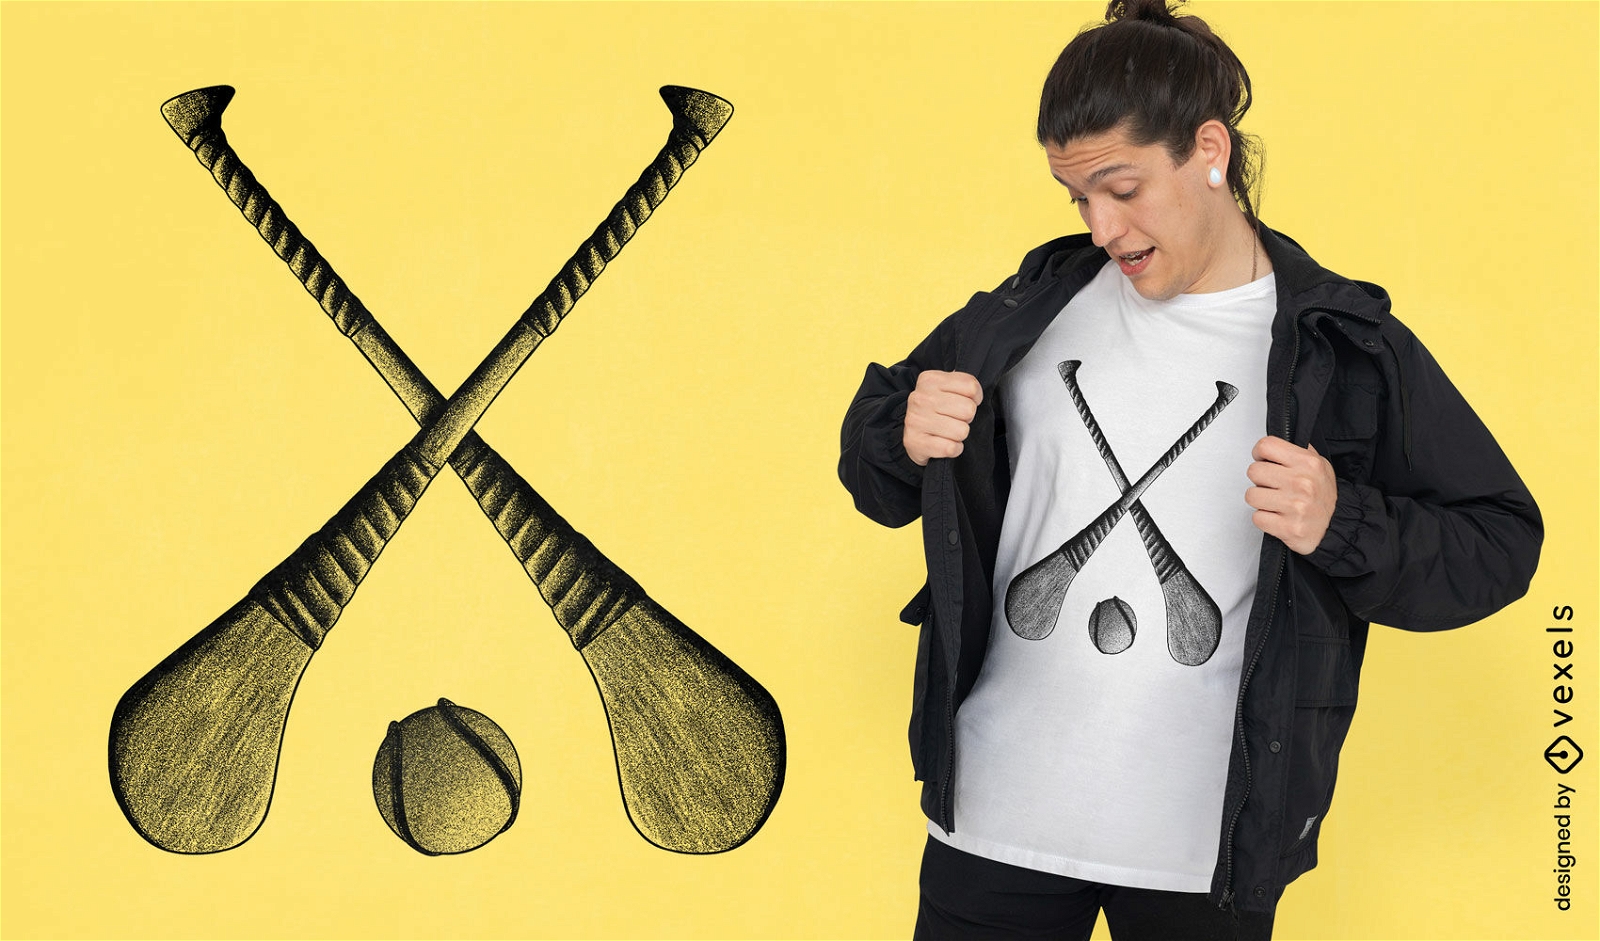 Crossed hurling bats t-shirt design